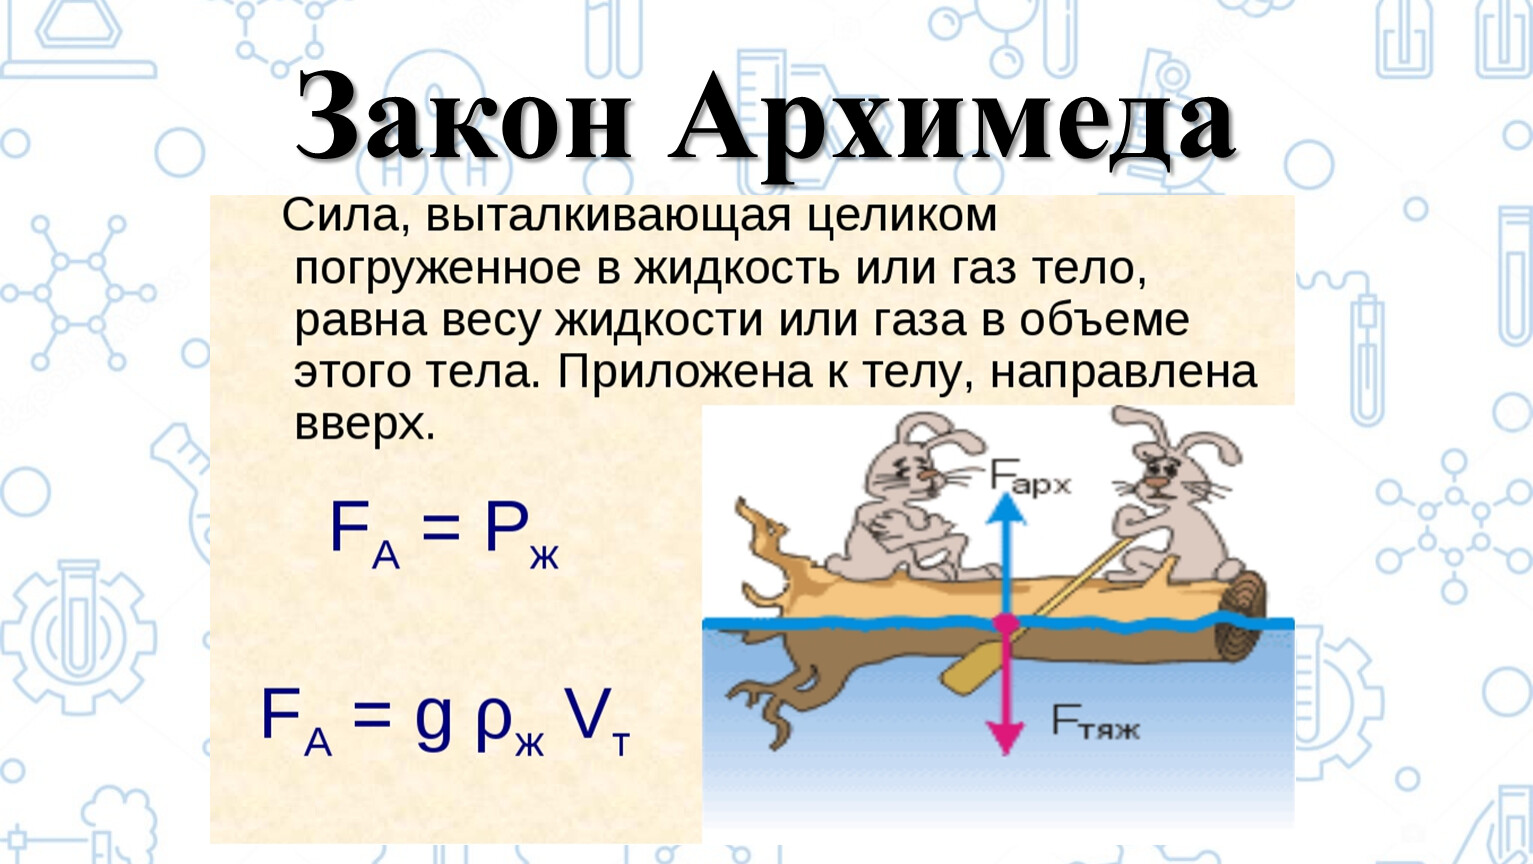 3 формулы силы архимеда. Формулы по физике 7 класс сила Архимеда. Сила Архимеда формула 7 класс. Сила Архимеда 7 класс физика. Закон Архимеда 7 класс физика формула.